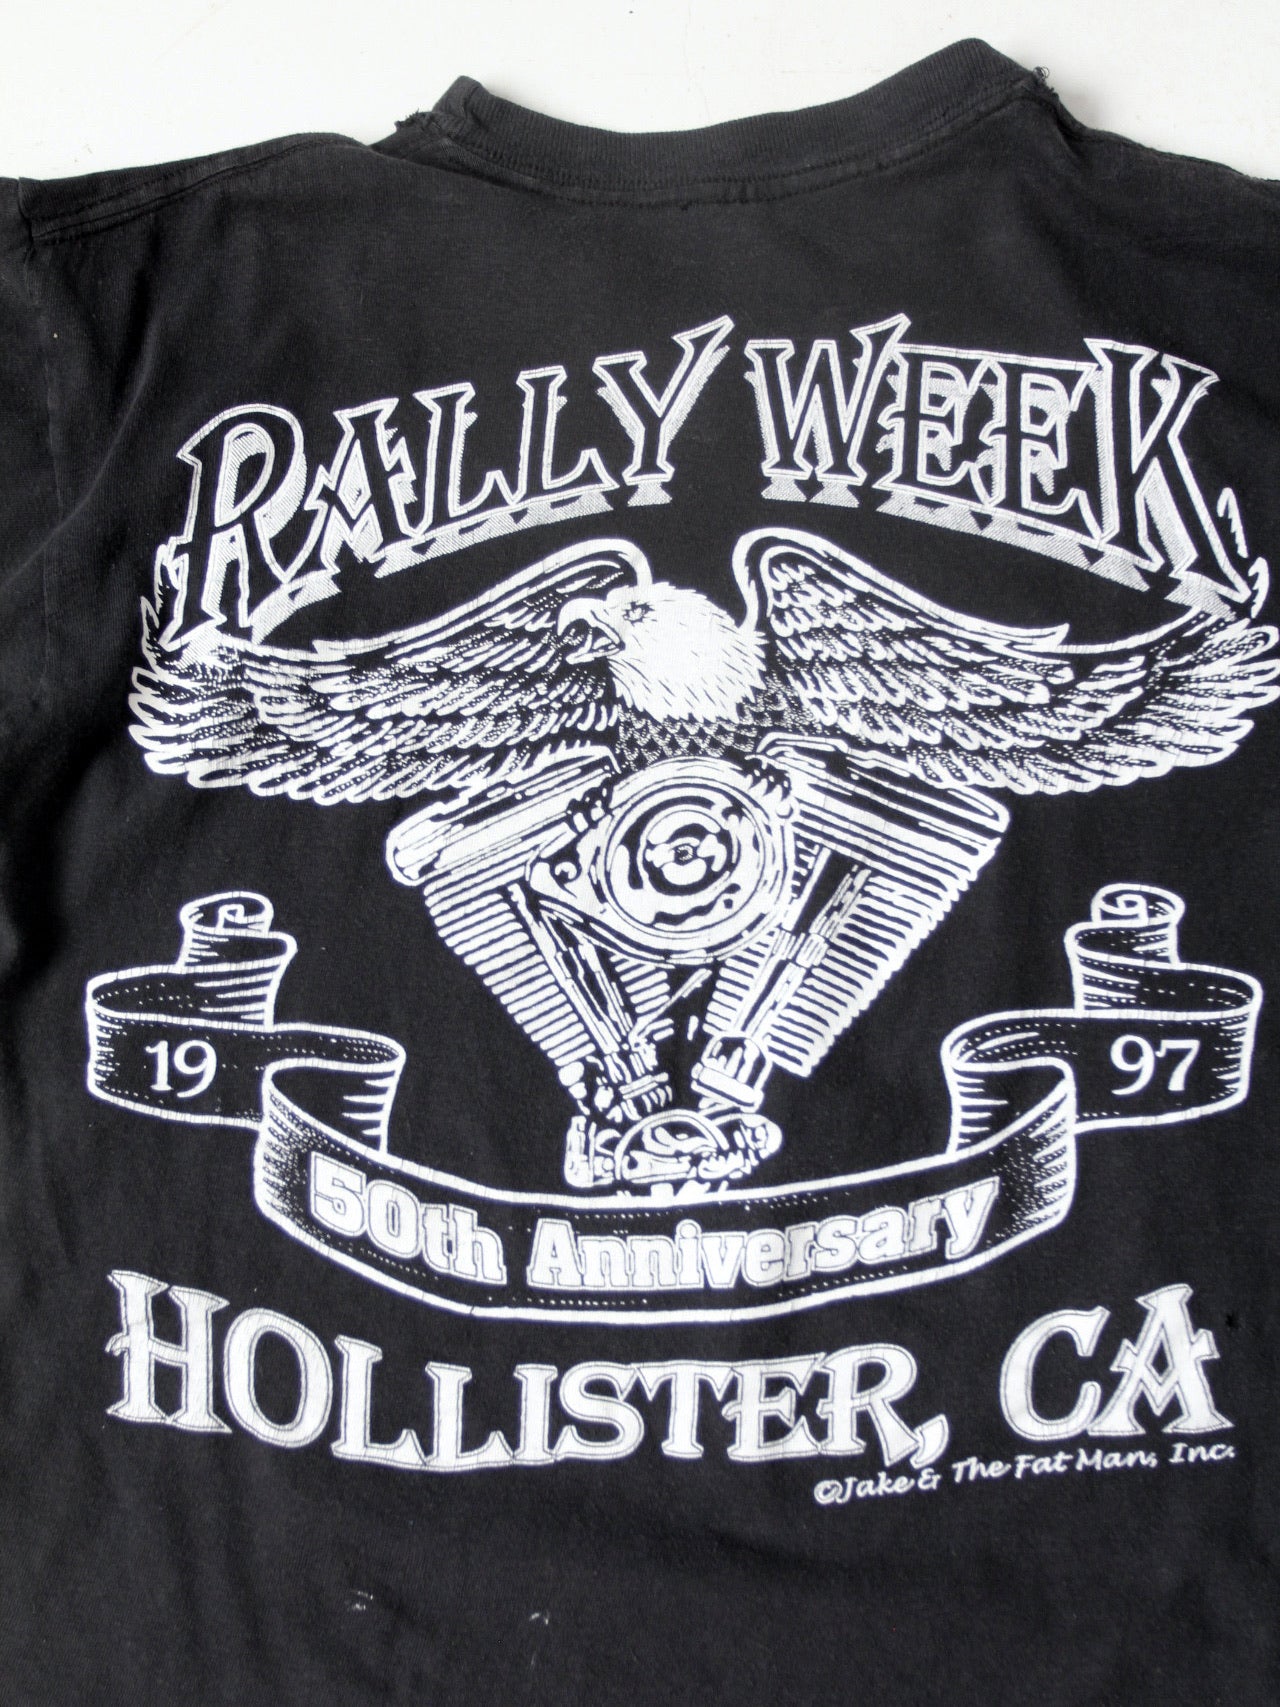 vintage 1997 Hollister rally week t-shirt